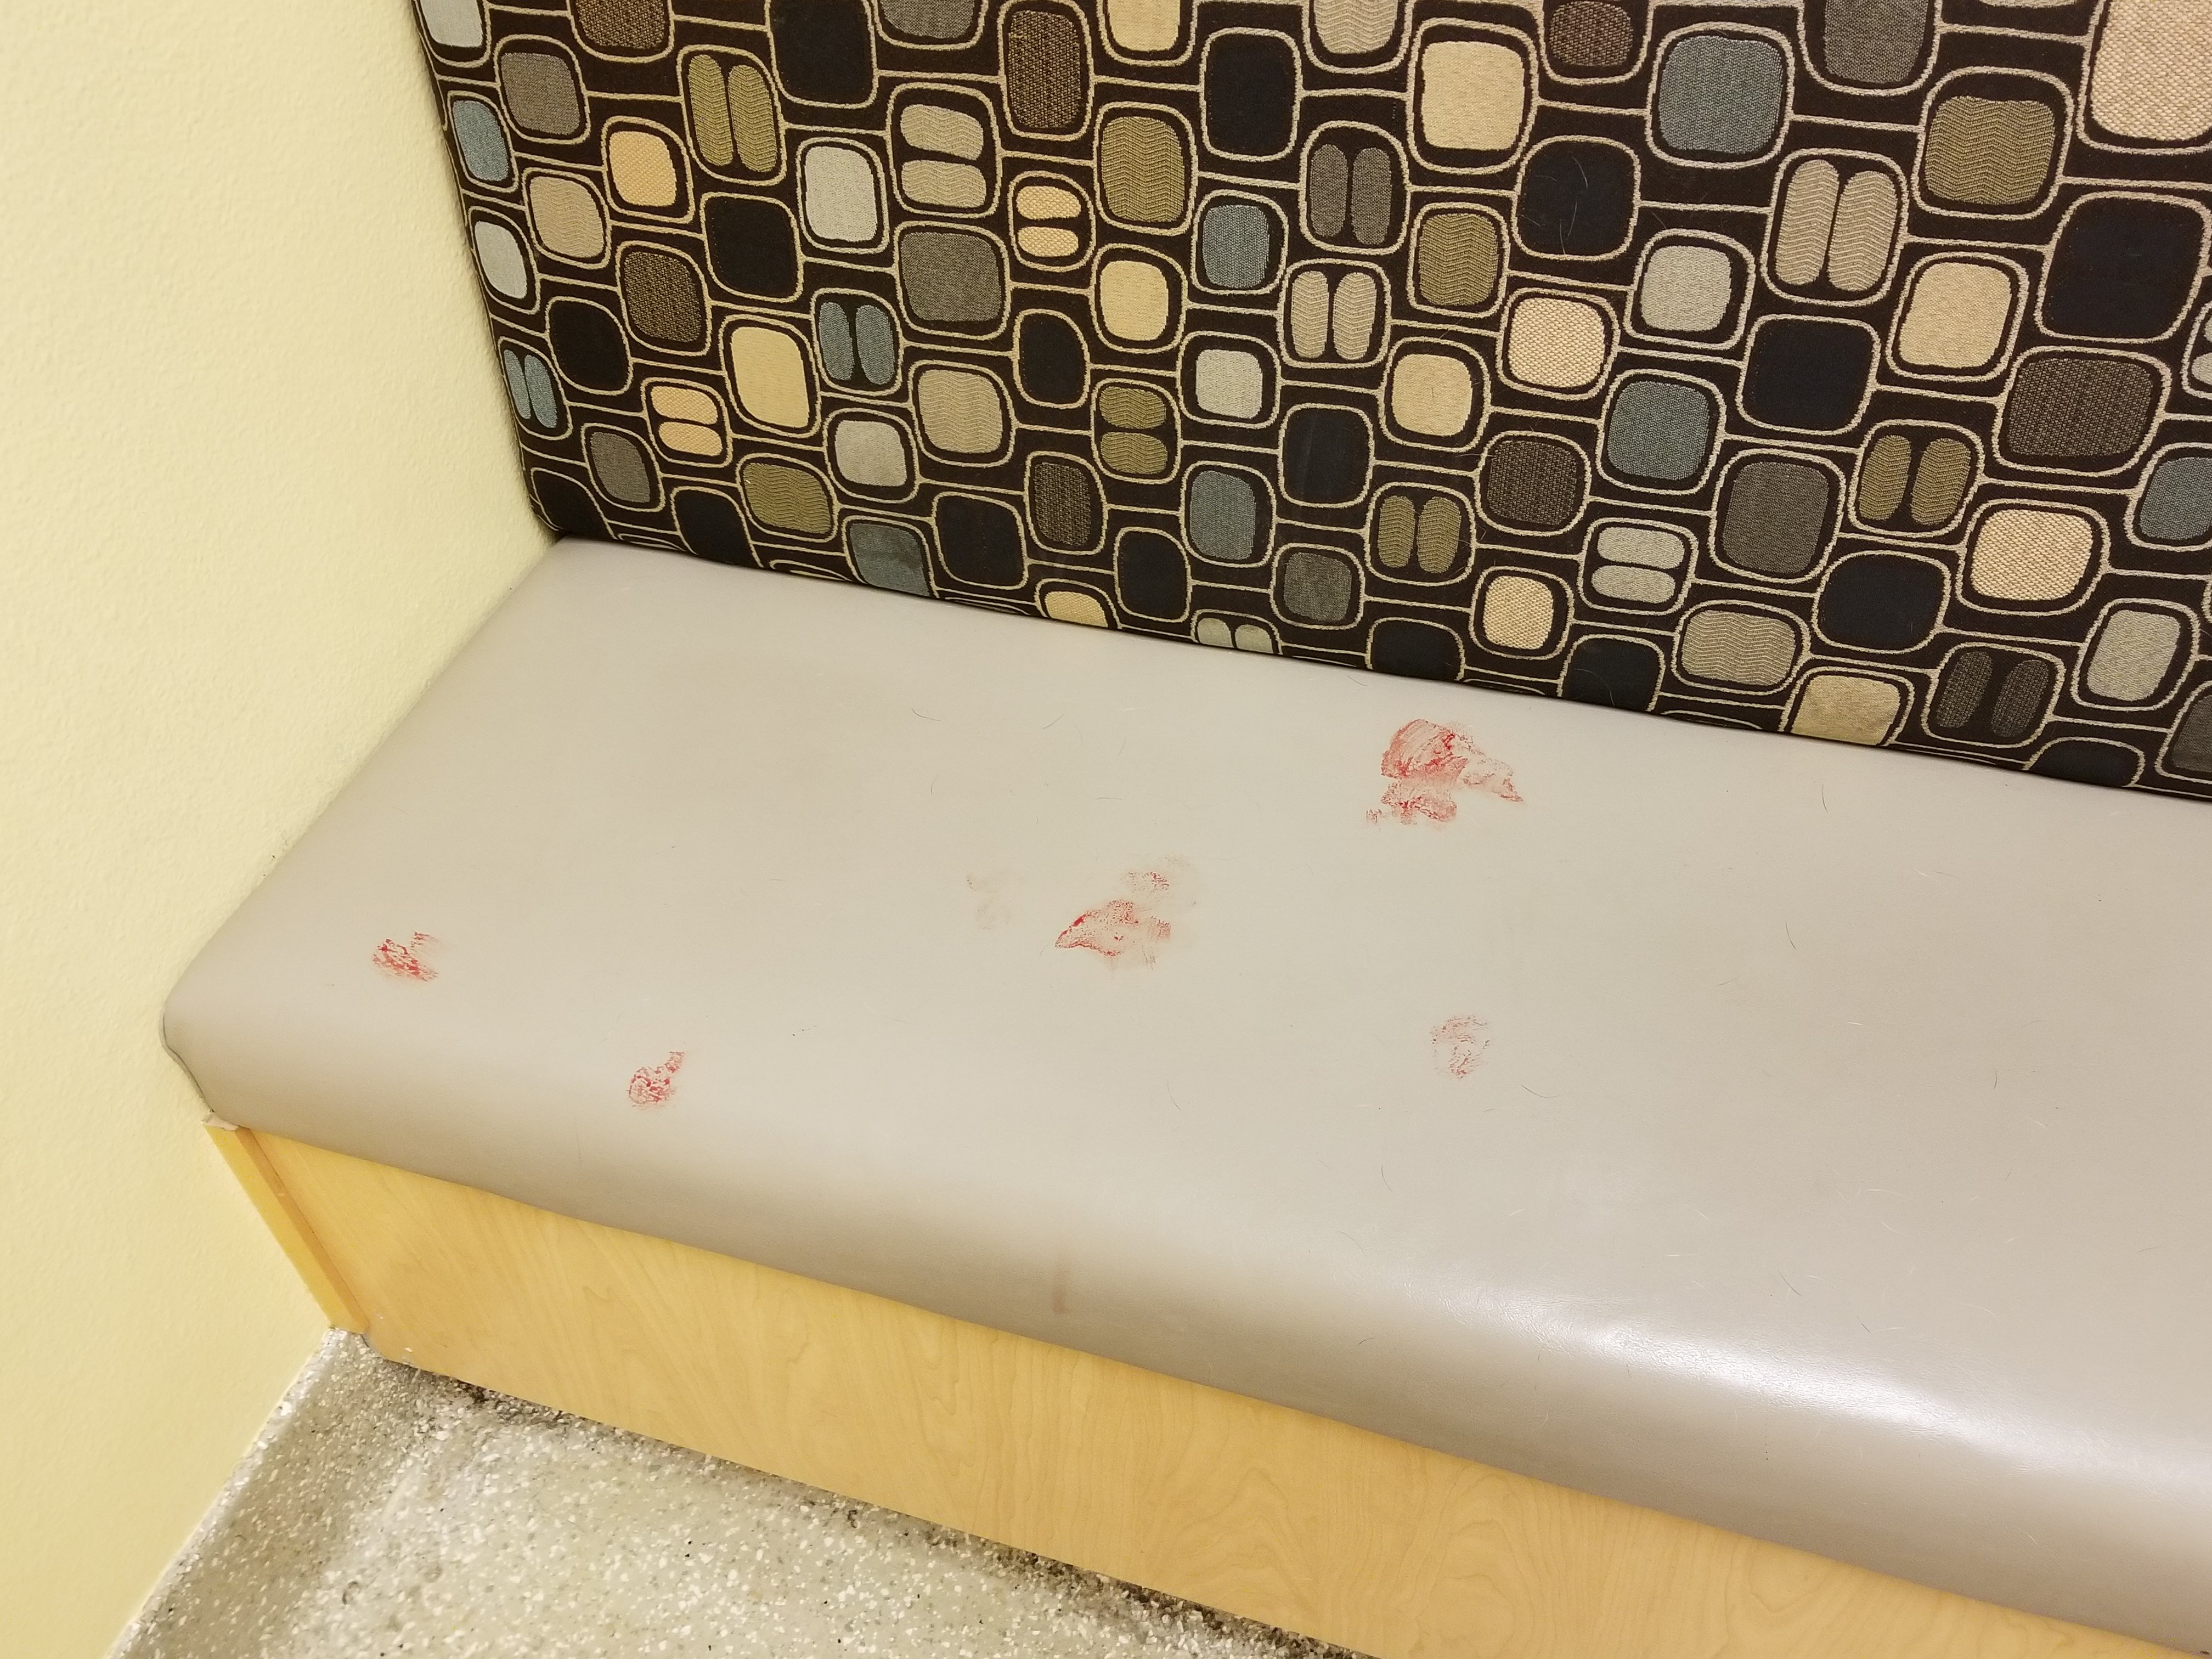 bleeding dog paws